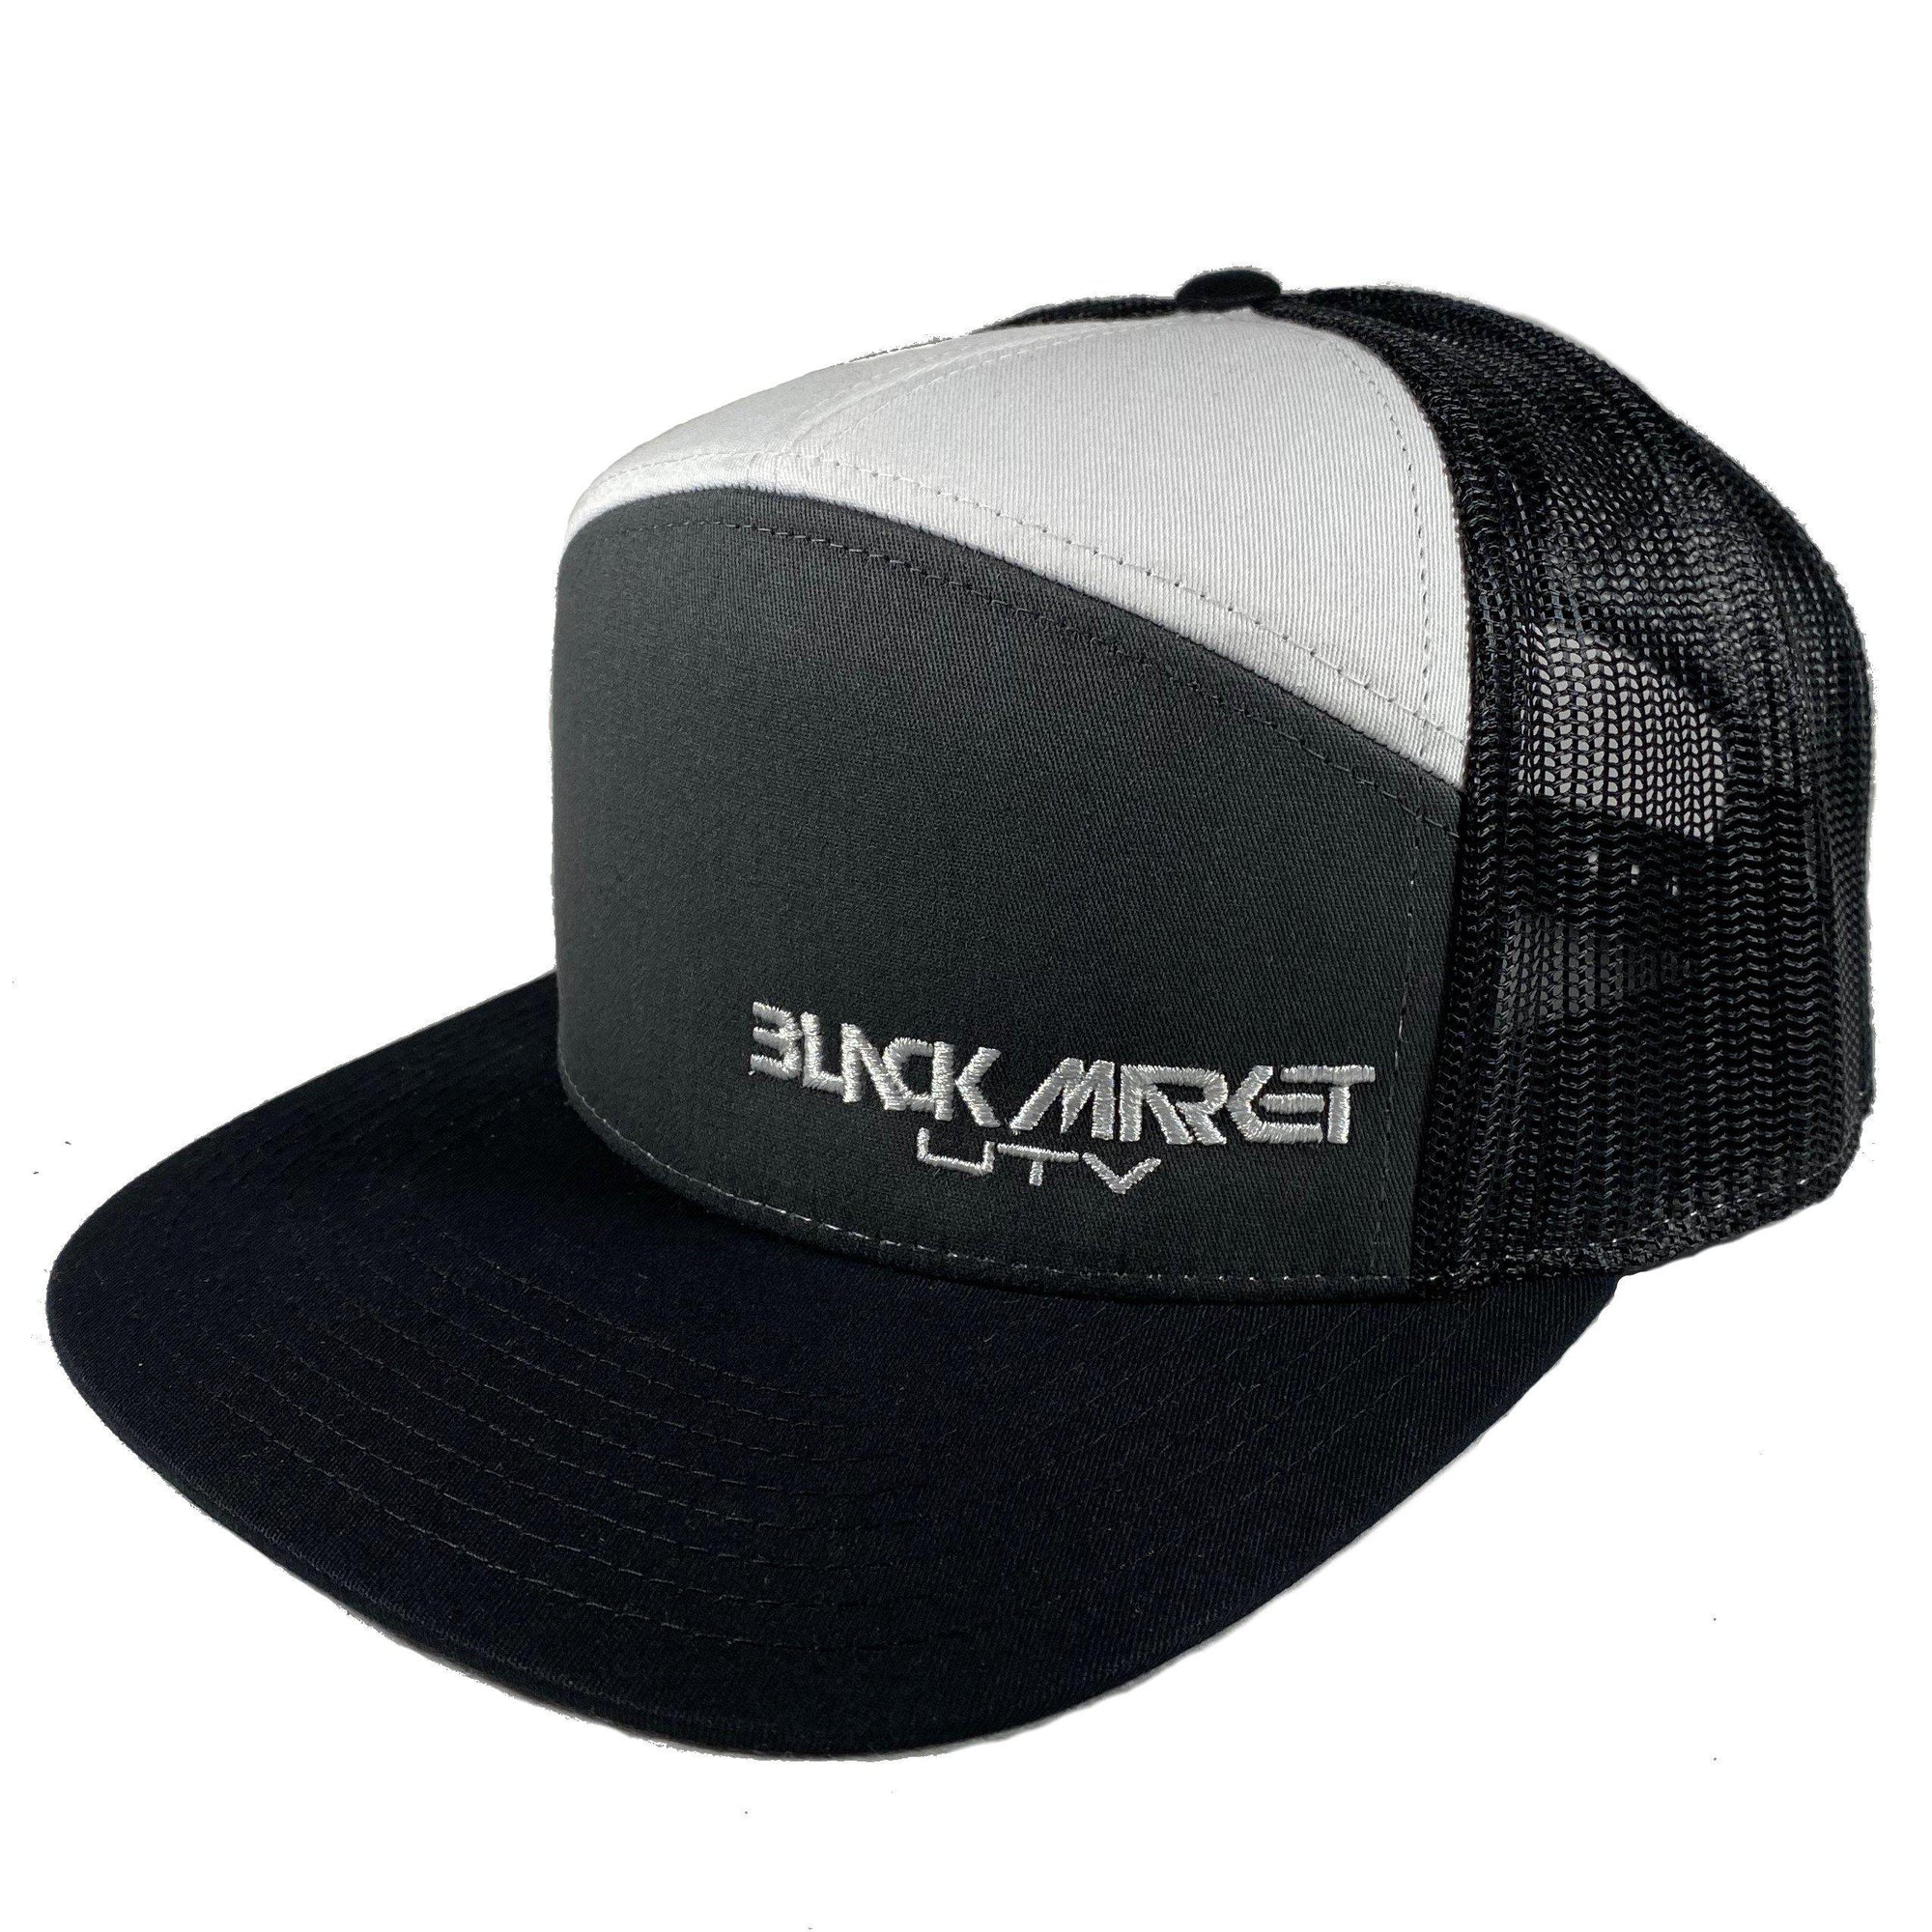 Black Market UTV - 7 Panel Flat Bill Snap Back Trucker Hats-Hats-Black Market UTV-Red/Black-Black Market UTV